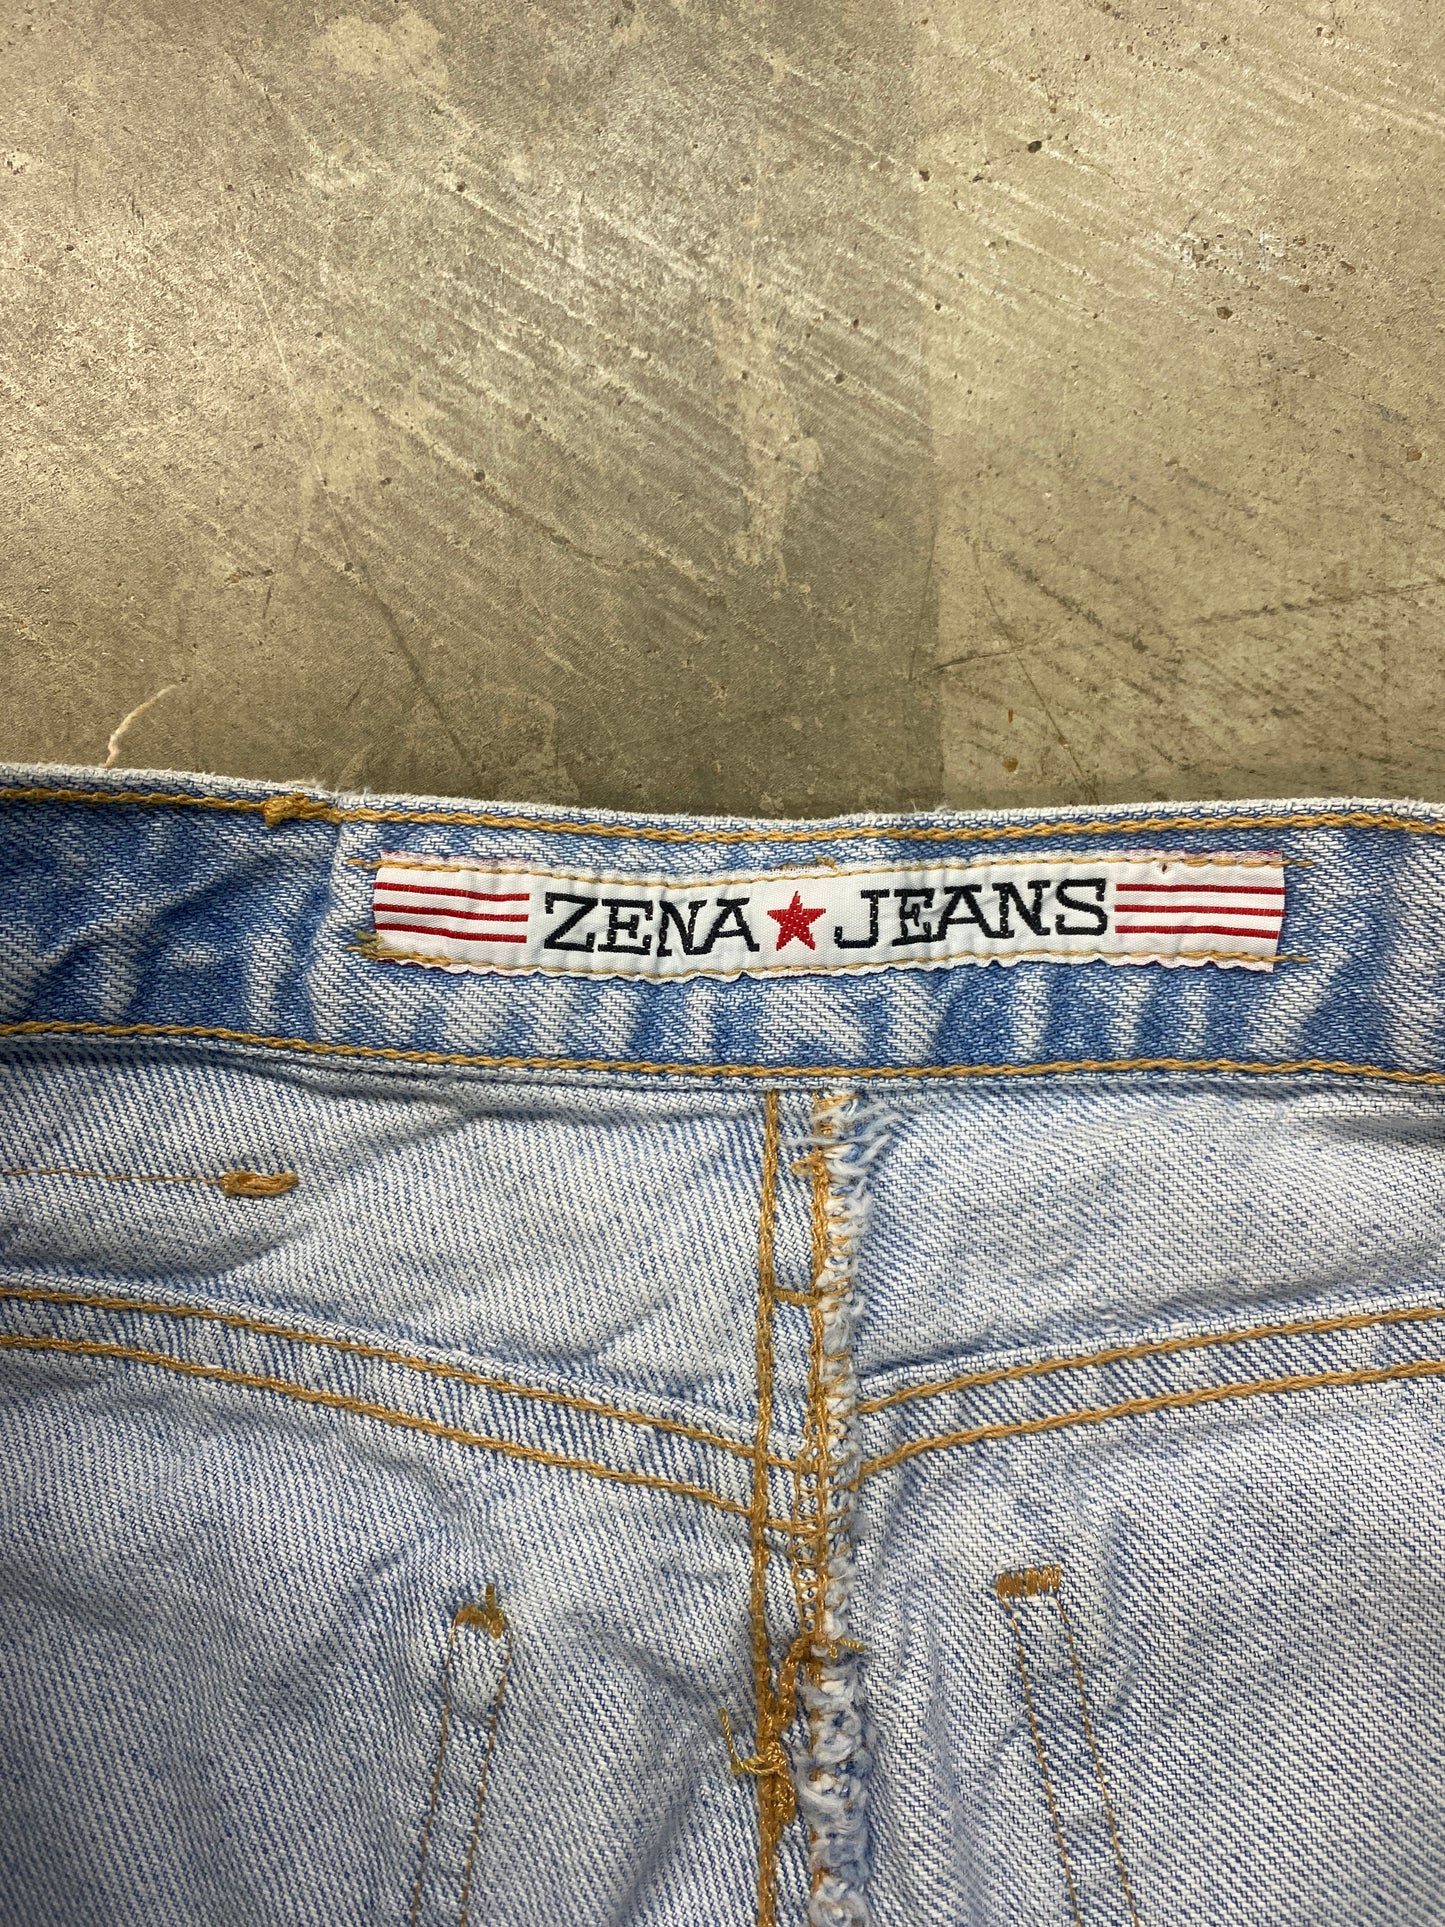 Load image into Gallery viewer, VTG Zena Light Wash Denim Jeans Sz 26x30
